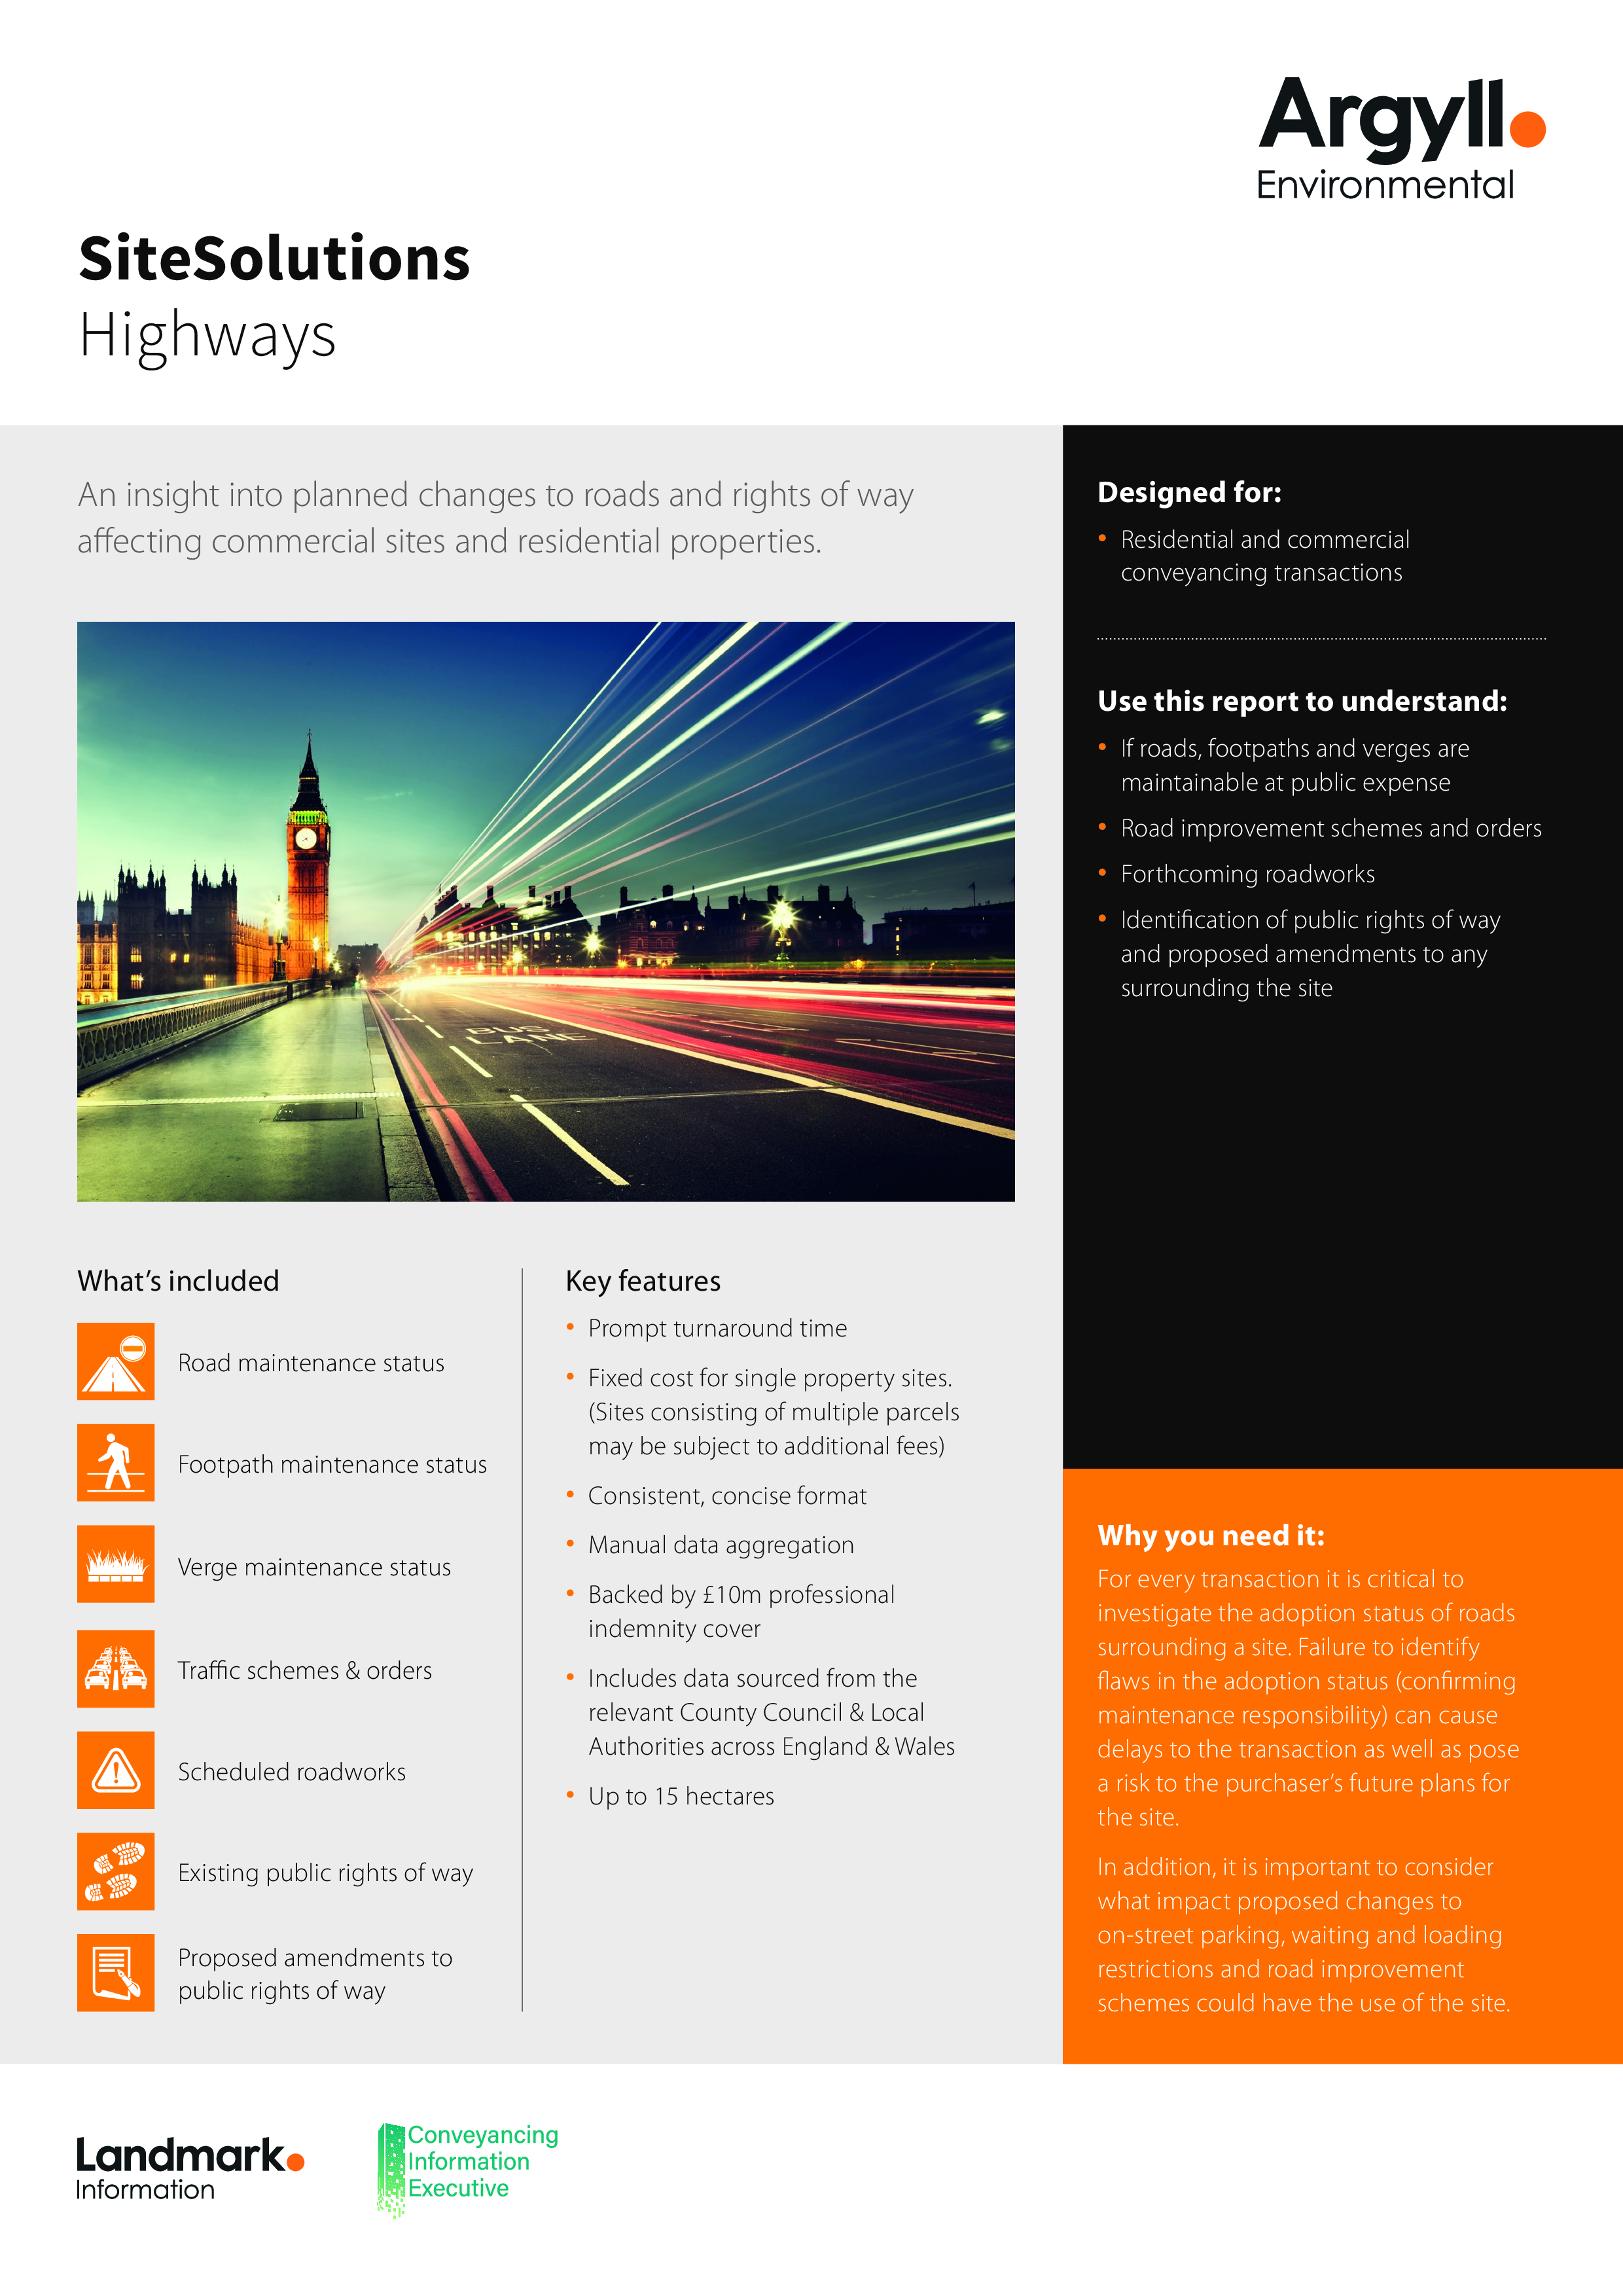 SiteSolutions Highways Image